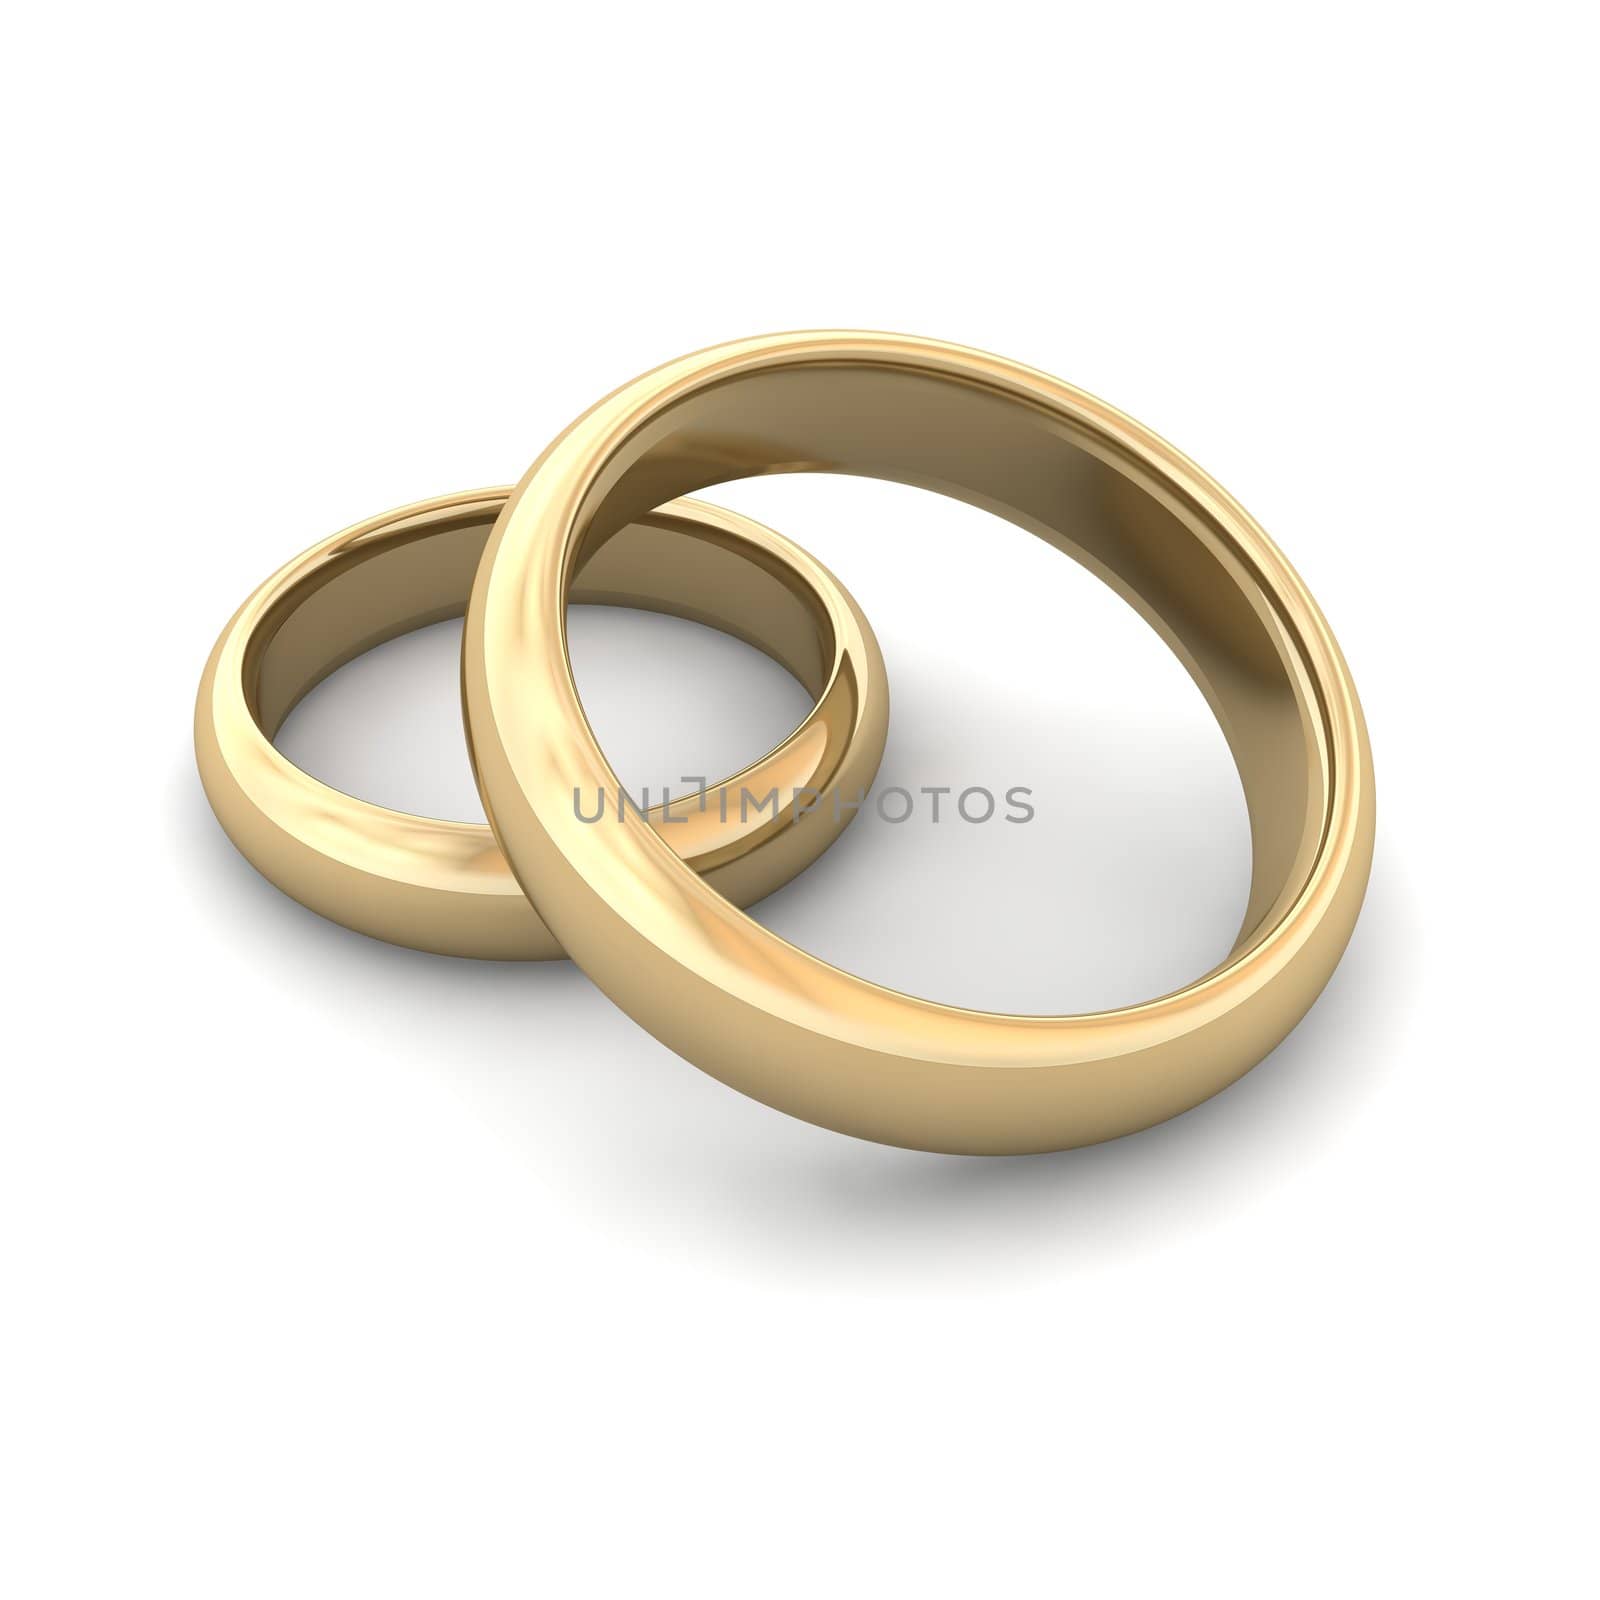 Golden wedding rings. 3d rendered illustration.